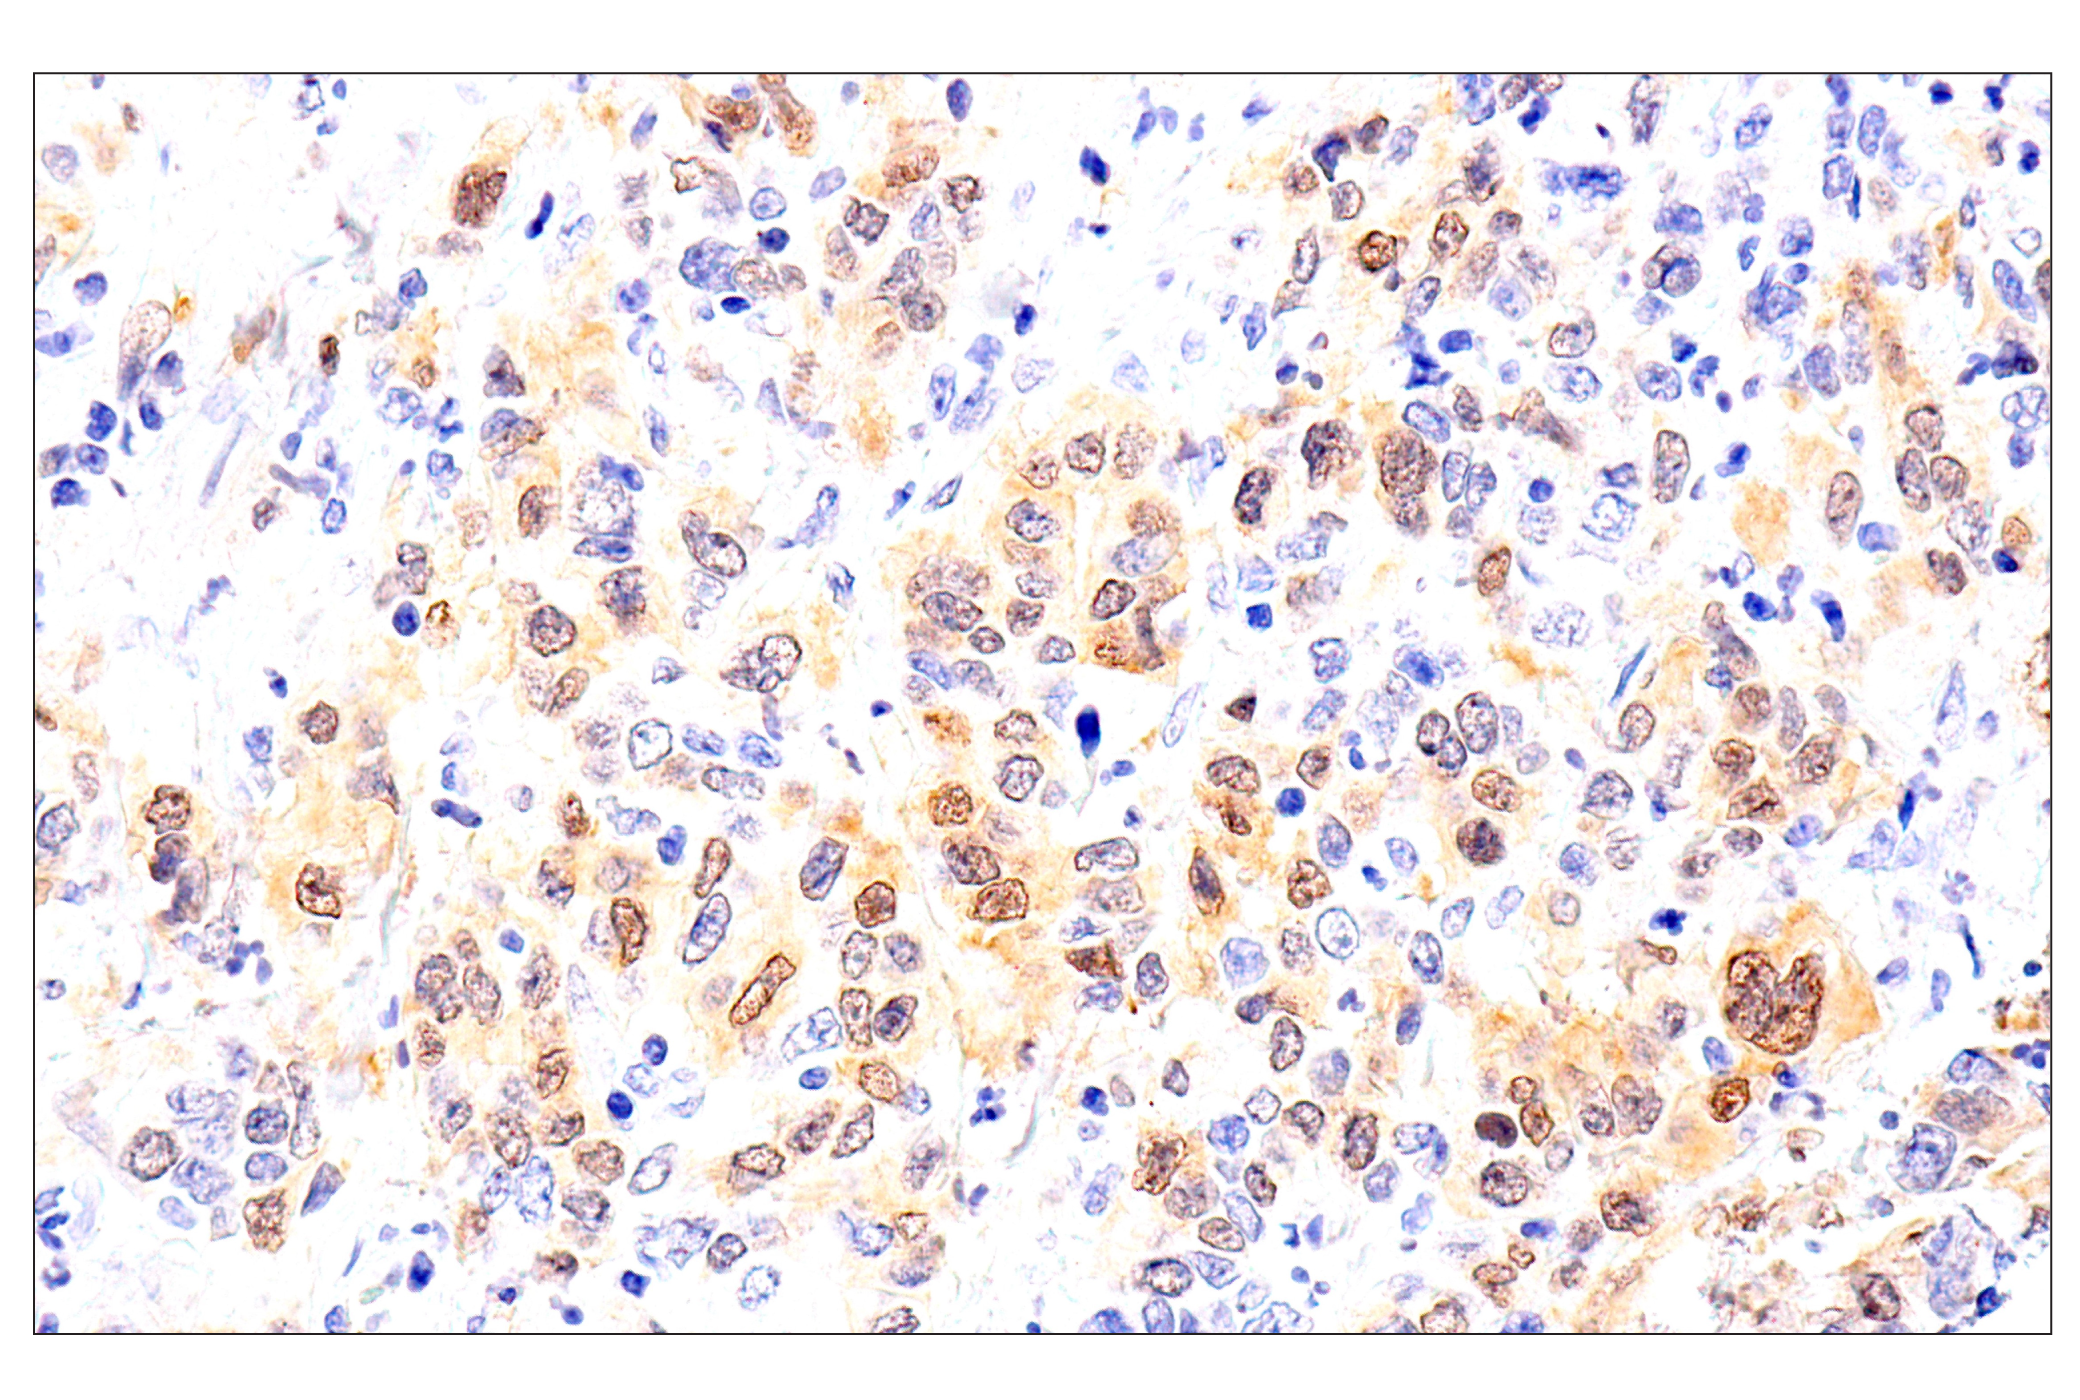  Image 13: PhosphoPlus® Chk1 (Ser317) Antibody Duet